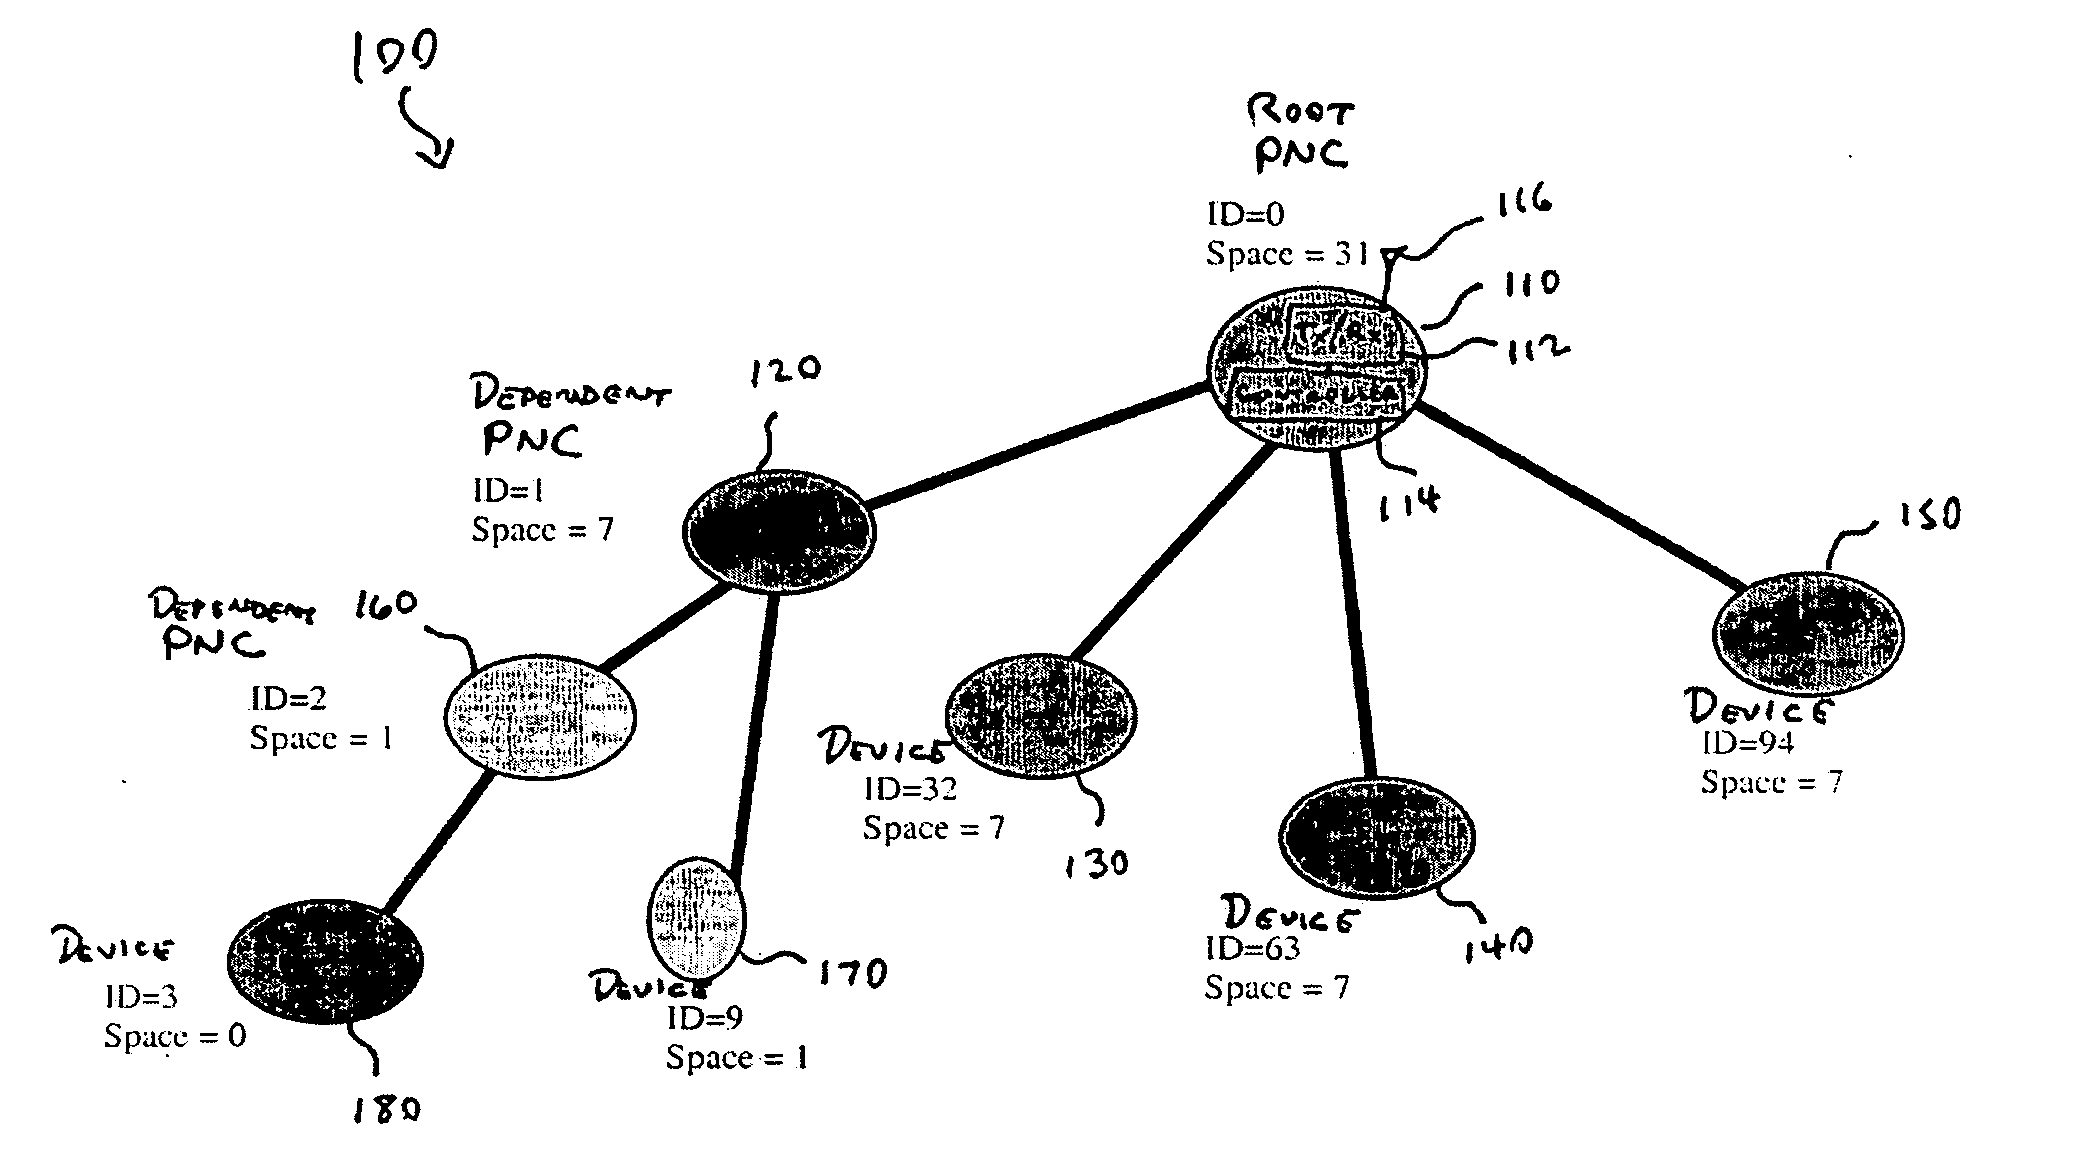 Piconet spanning tree network